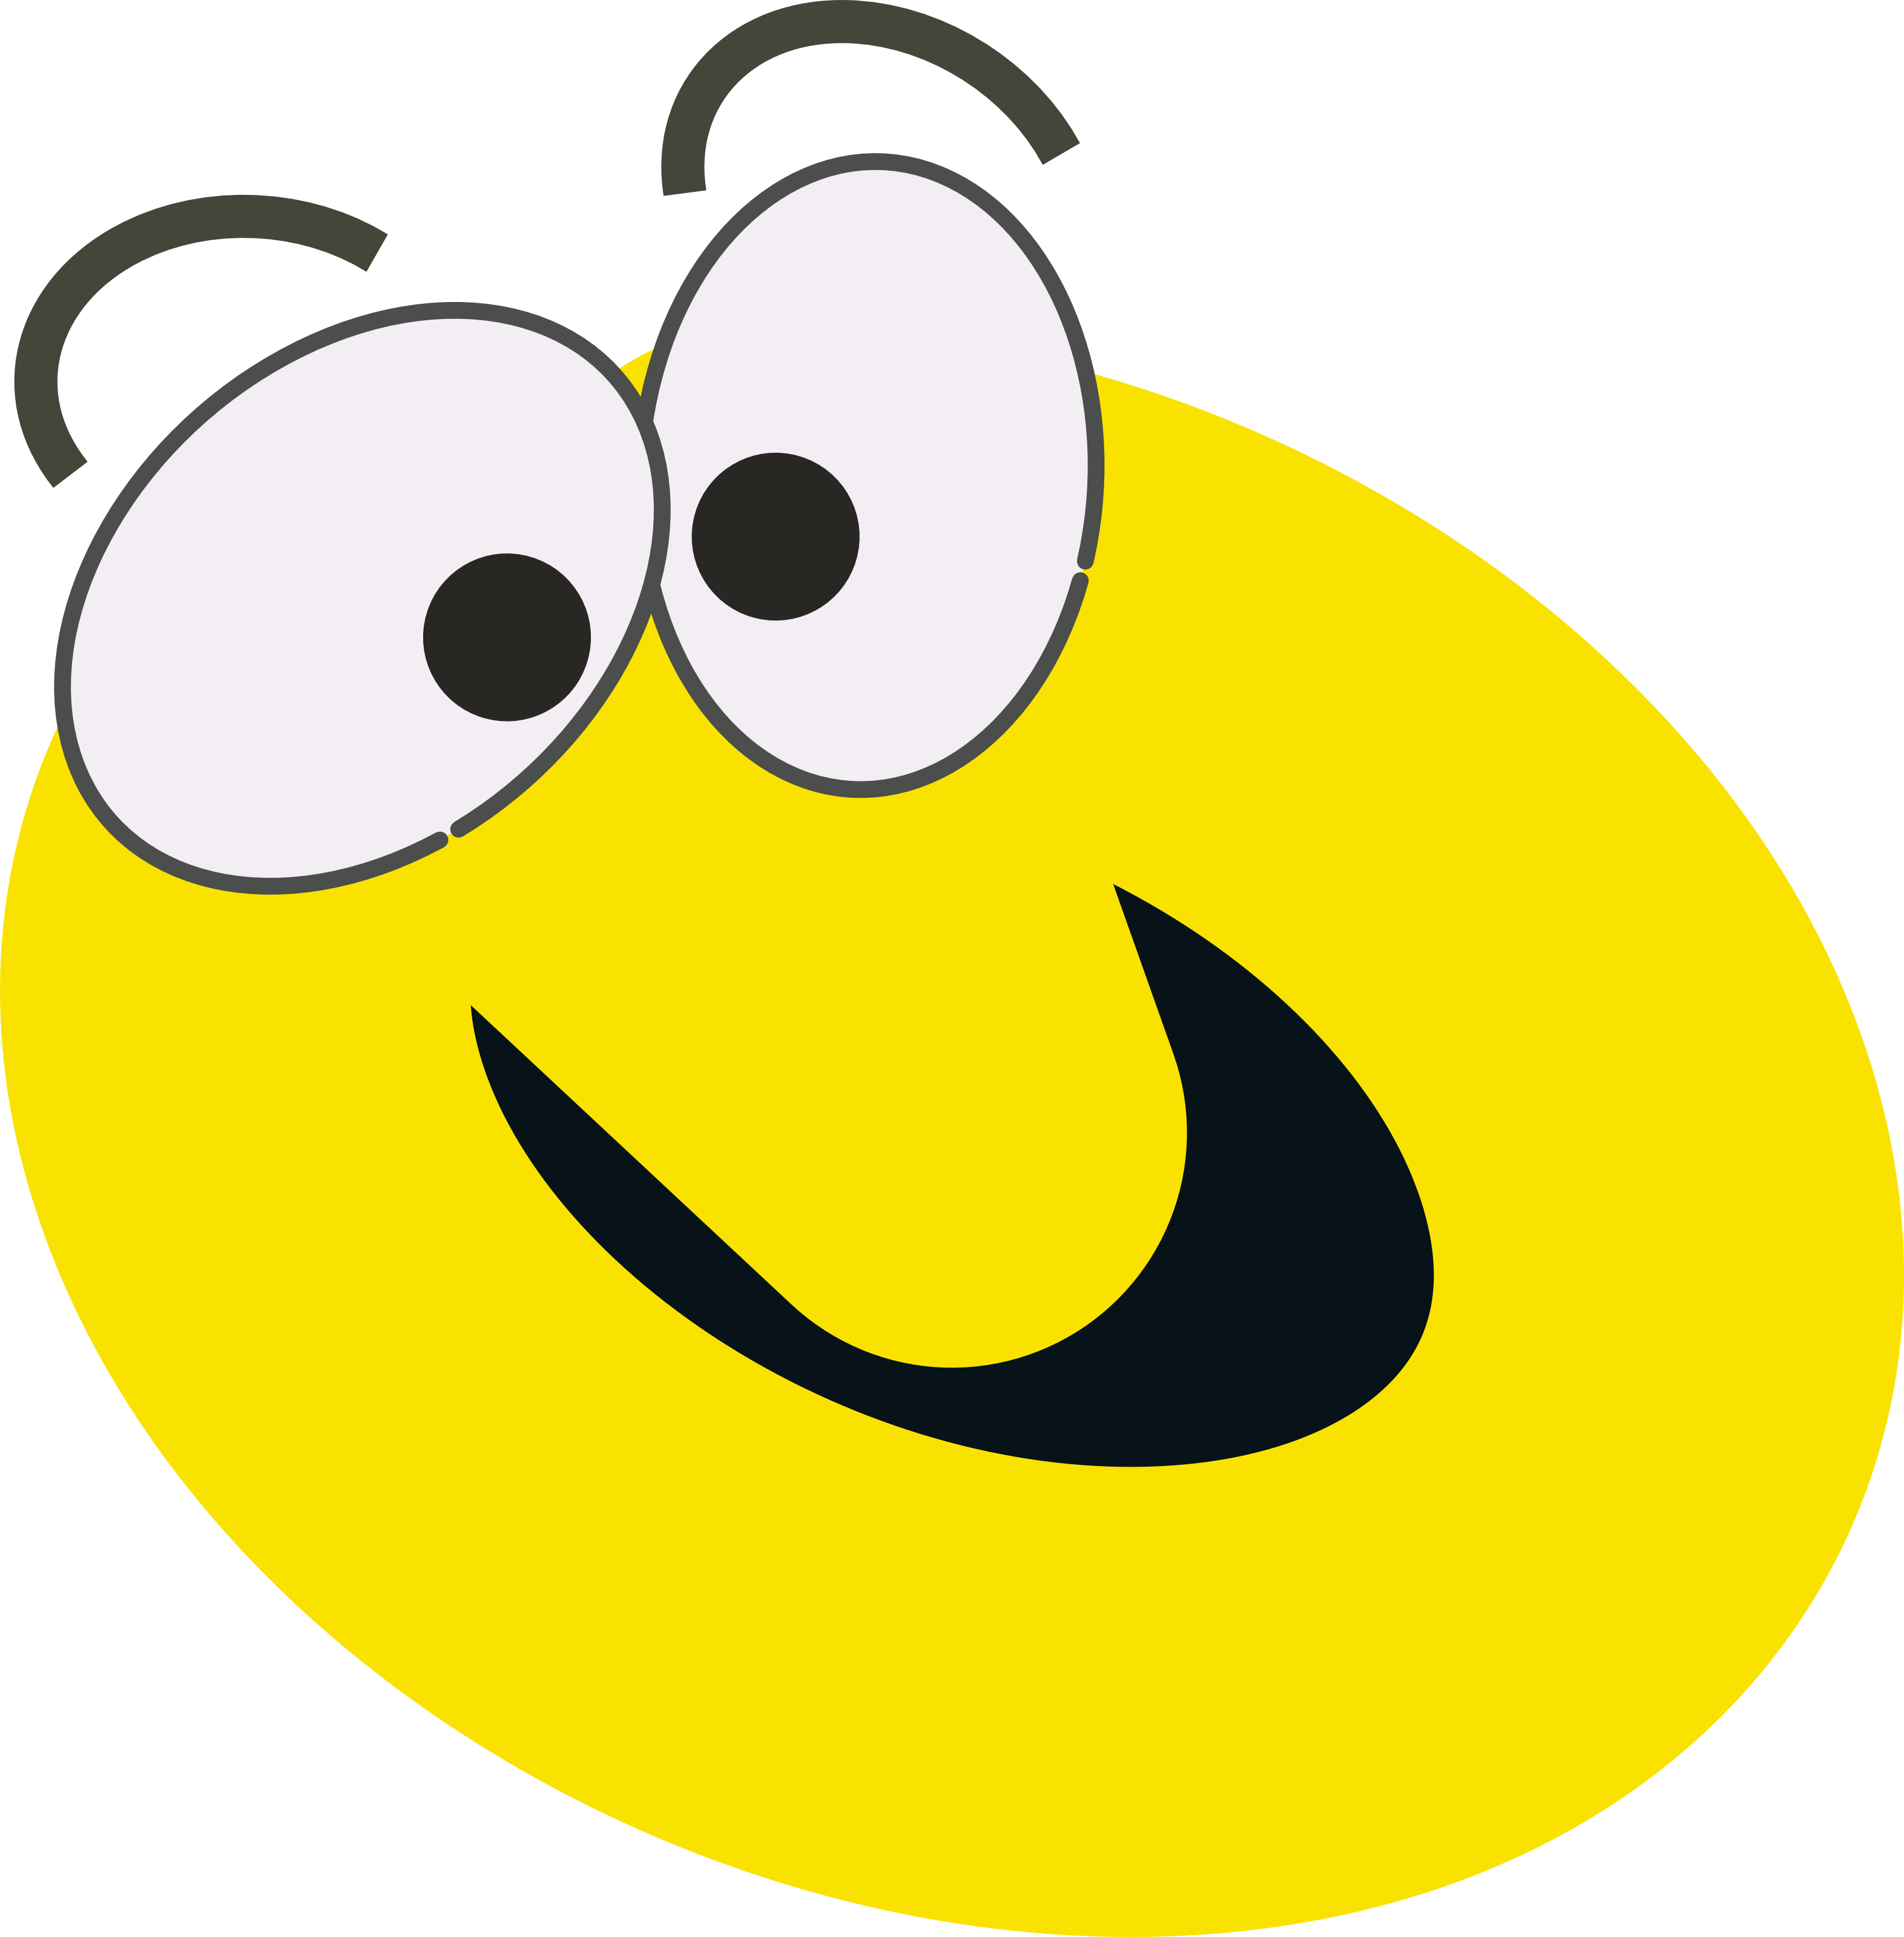 Smiley Face Clip Art | Clipart Panda - Free Clipart Images